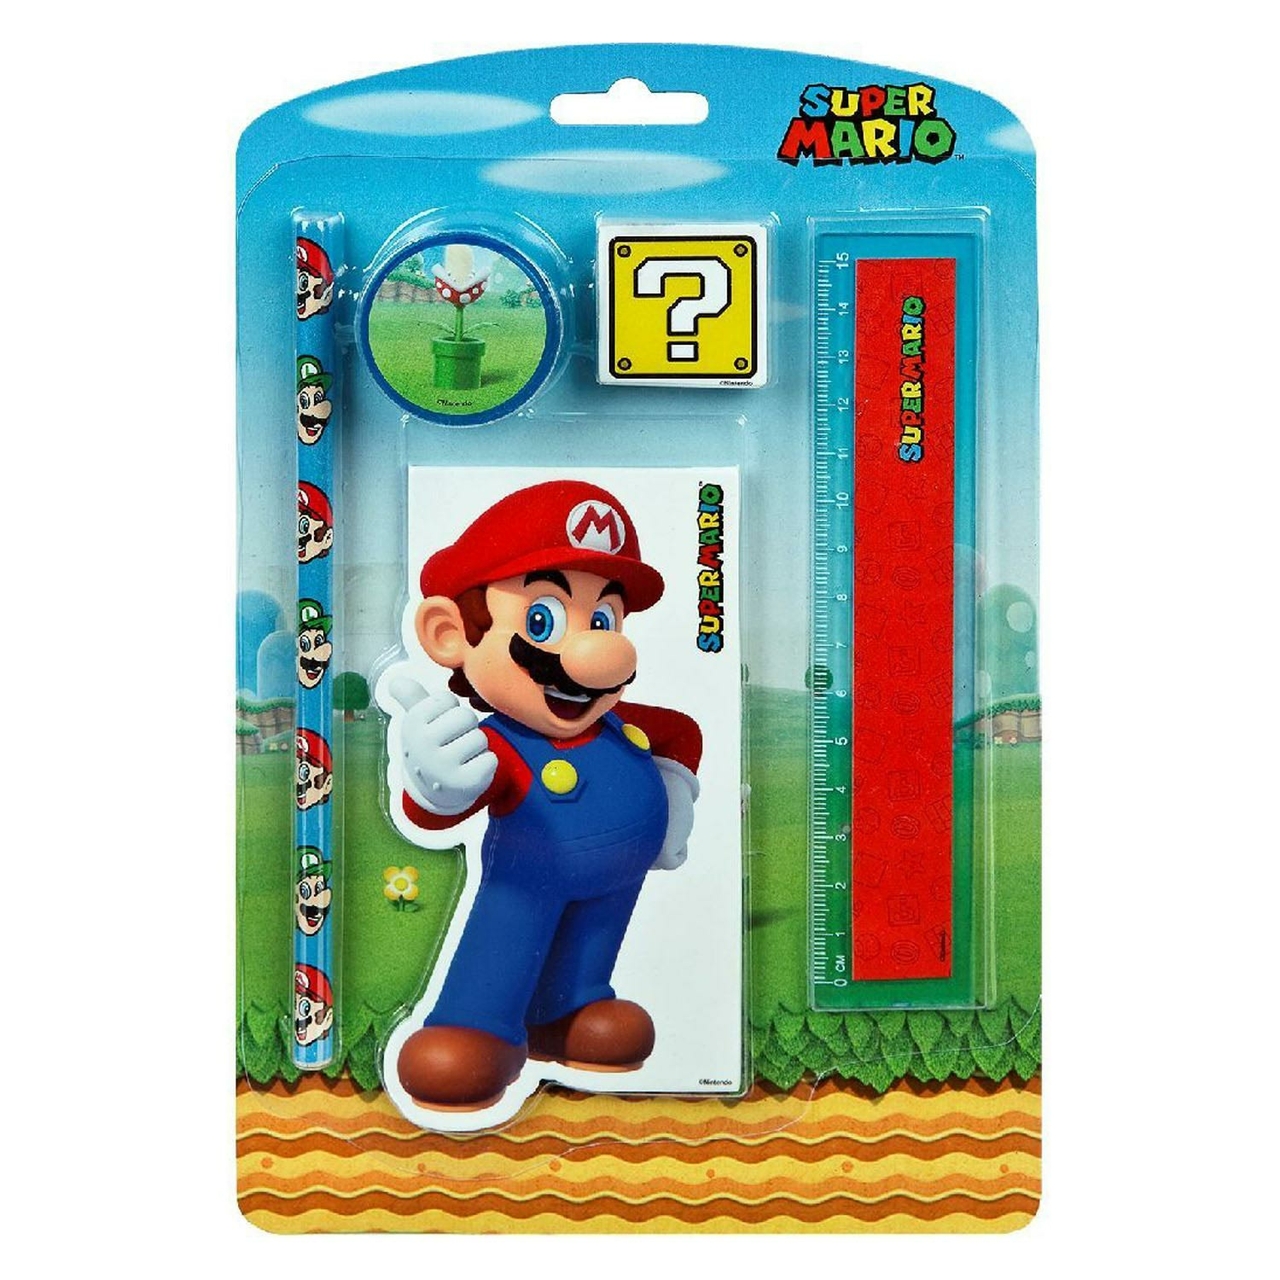 Auto geloof wacht Super Mario Stationery Set, 5dlg. - Het Speelgoedpaleis